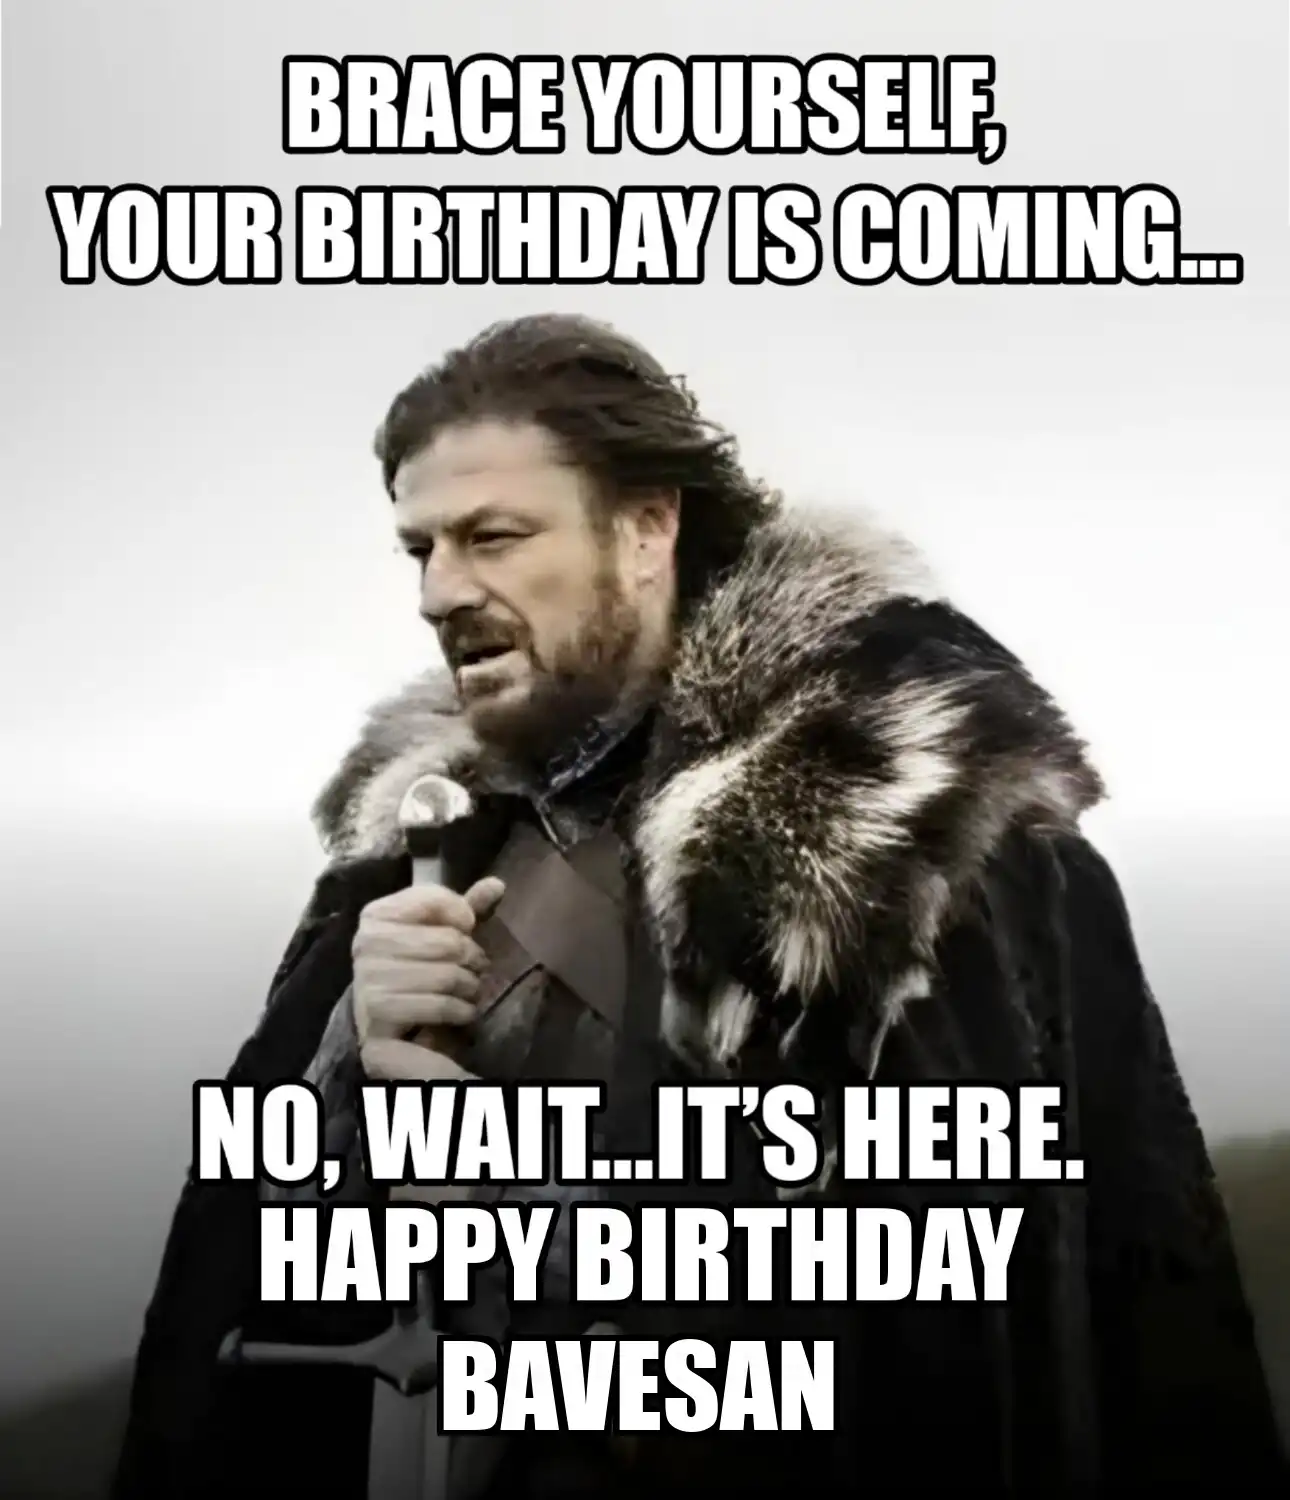 Happy Birthday Bavesan Brace Yourself Your Birthday Is Coming Meme